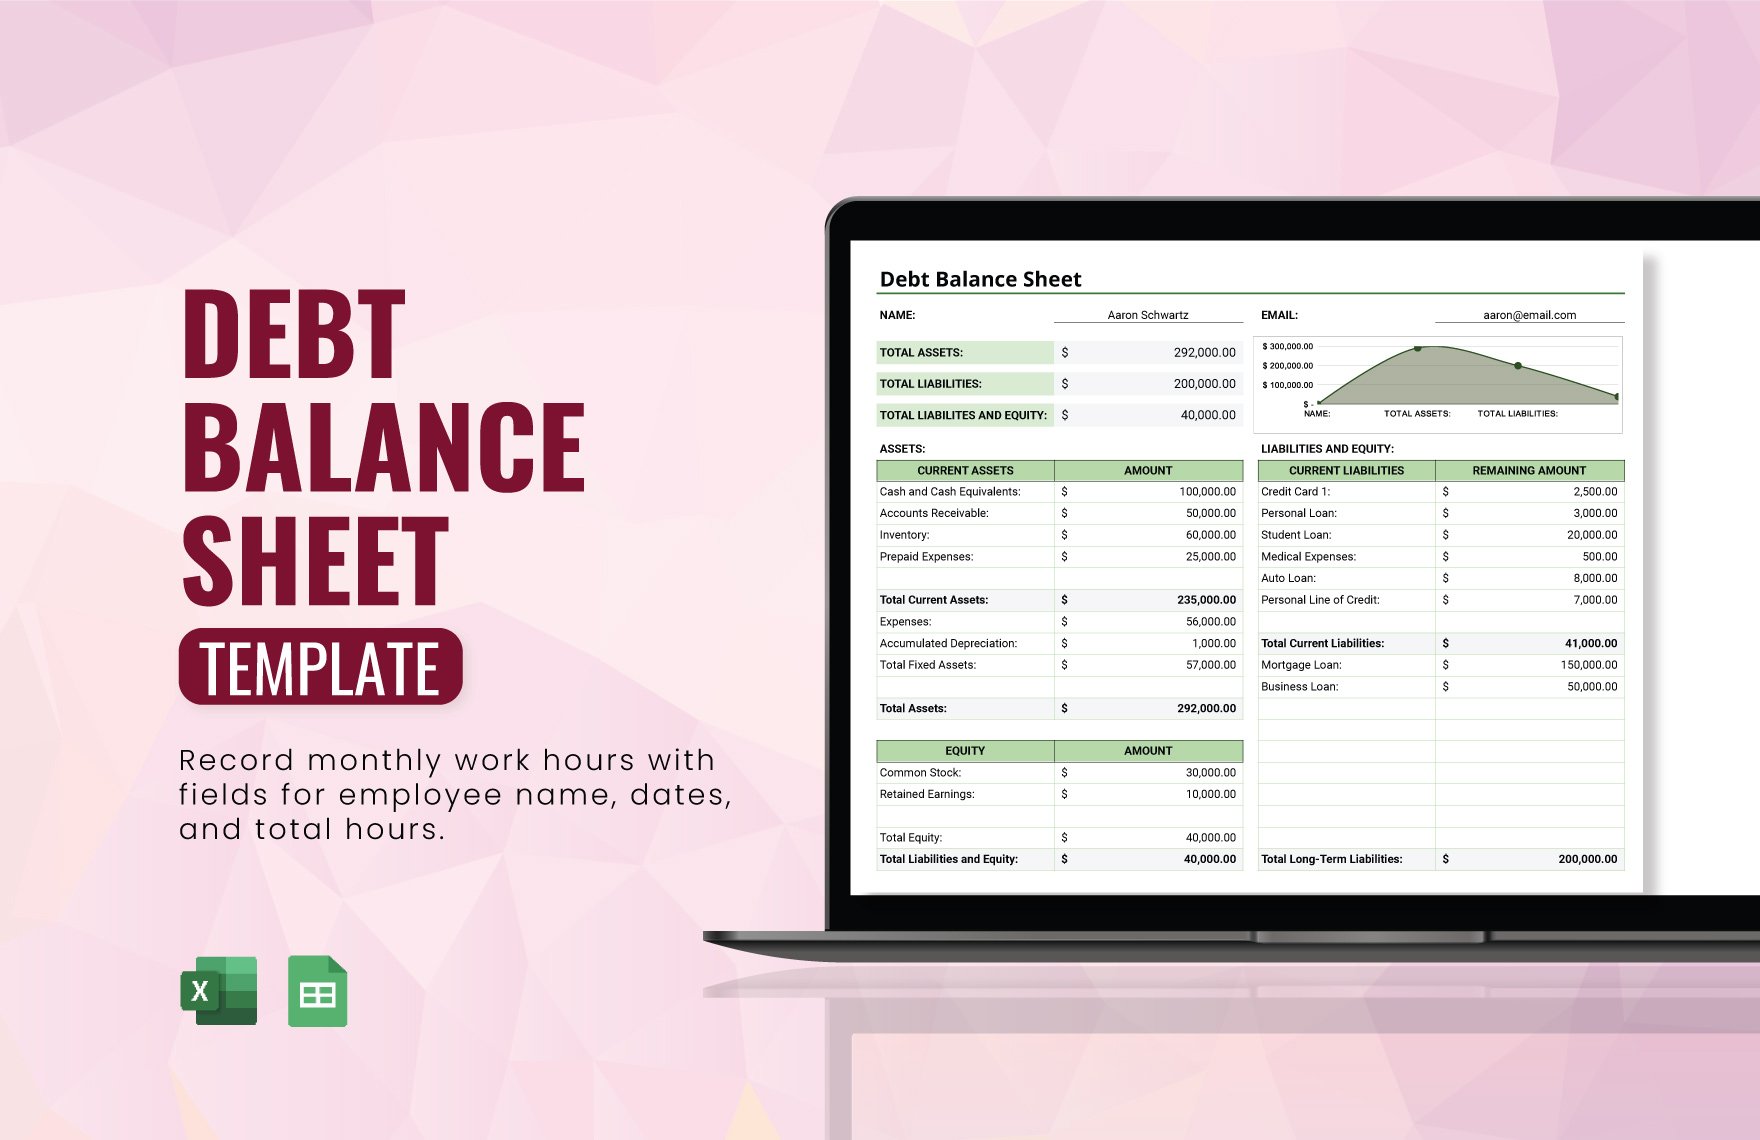 Debt Balance Sheet Template in Excel, Google Sheets